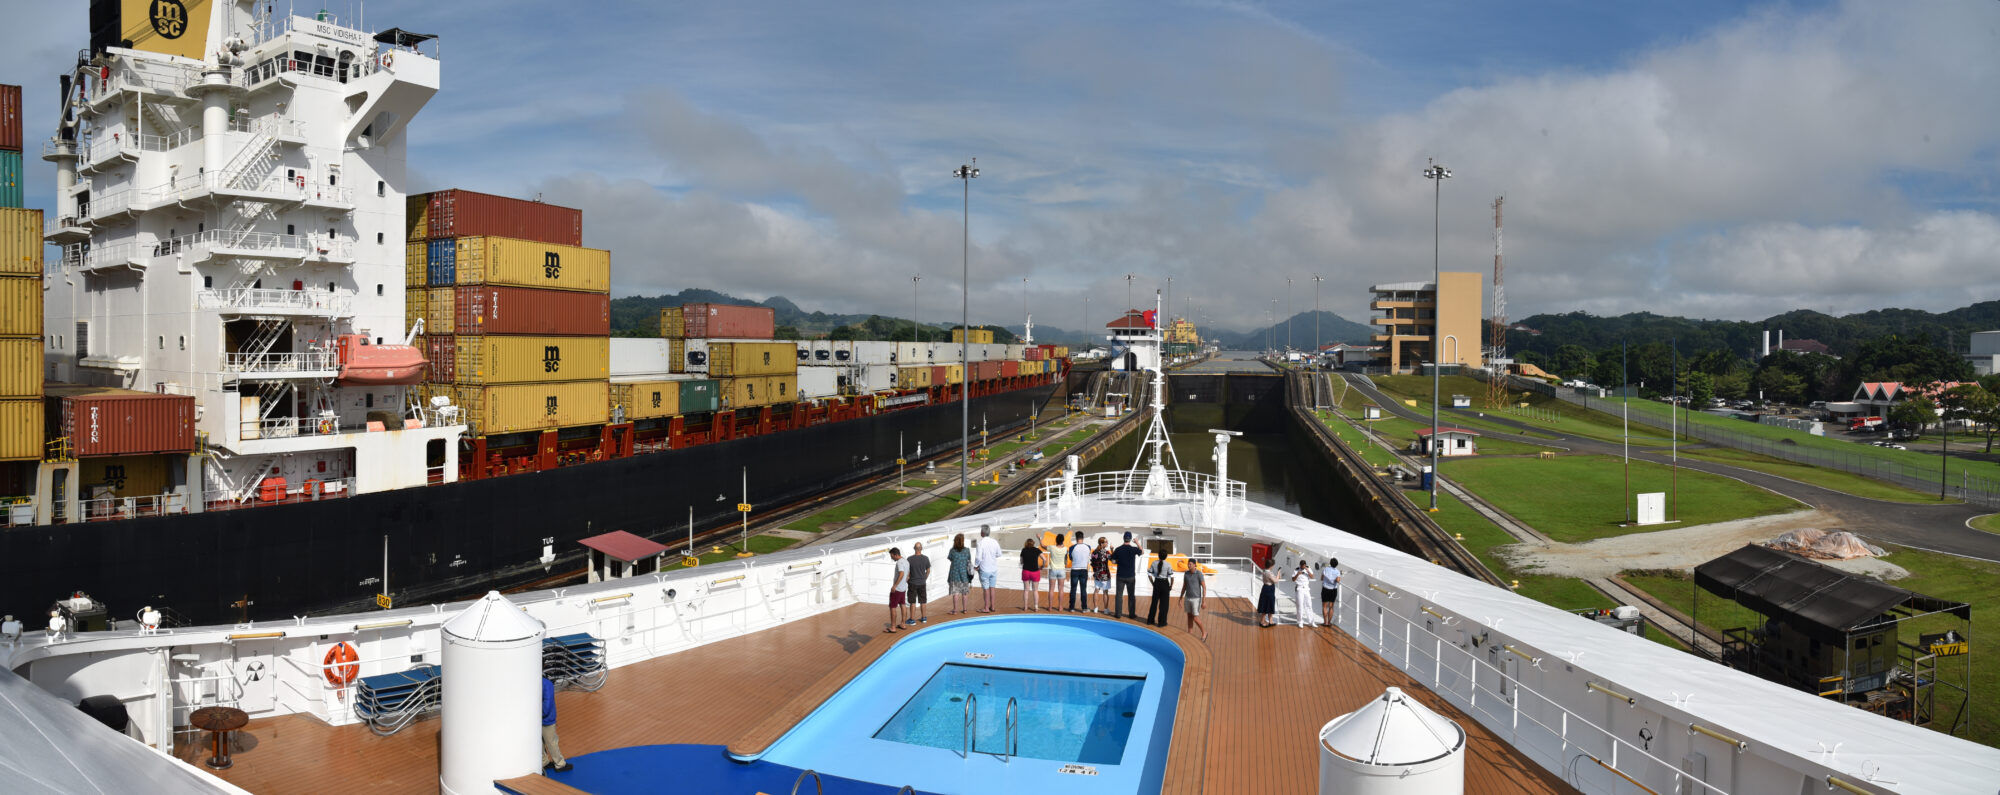 Panama Canal (23)